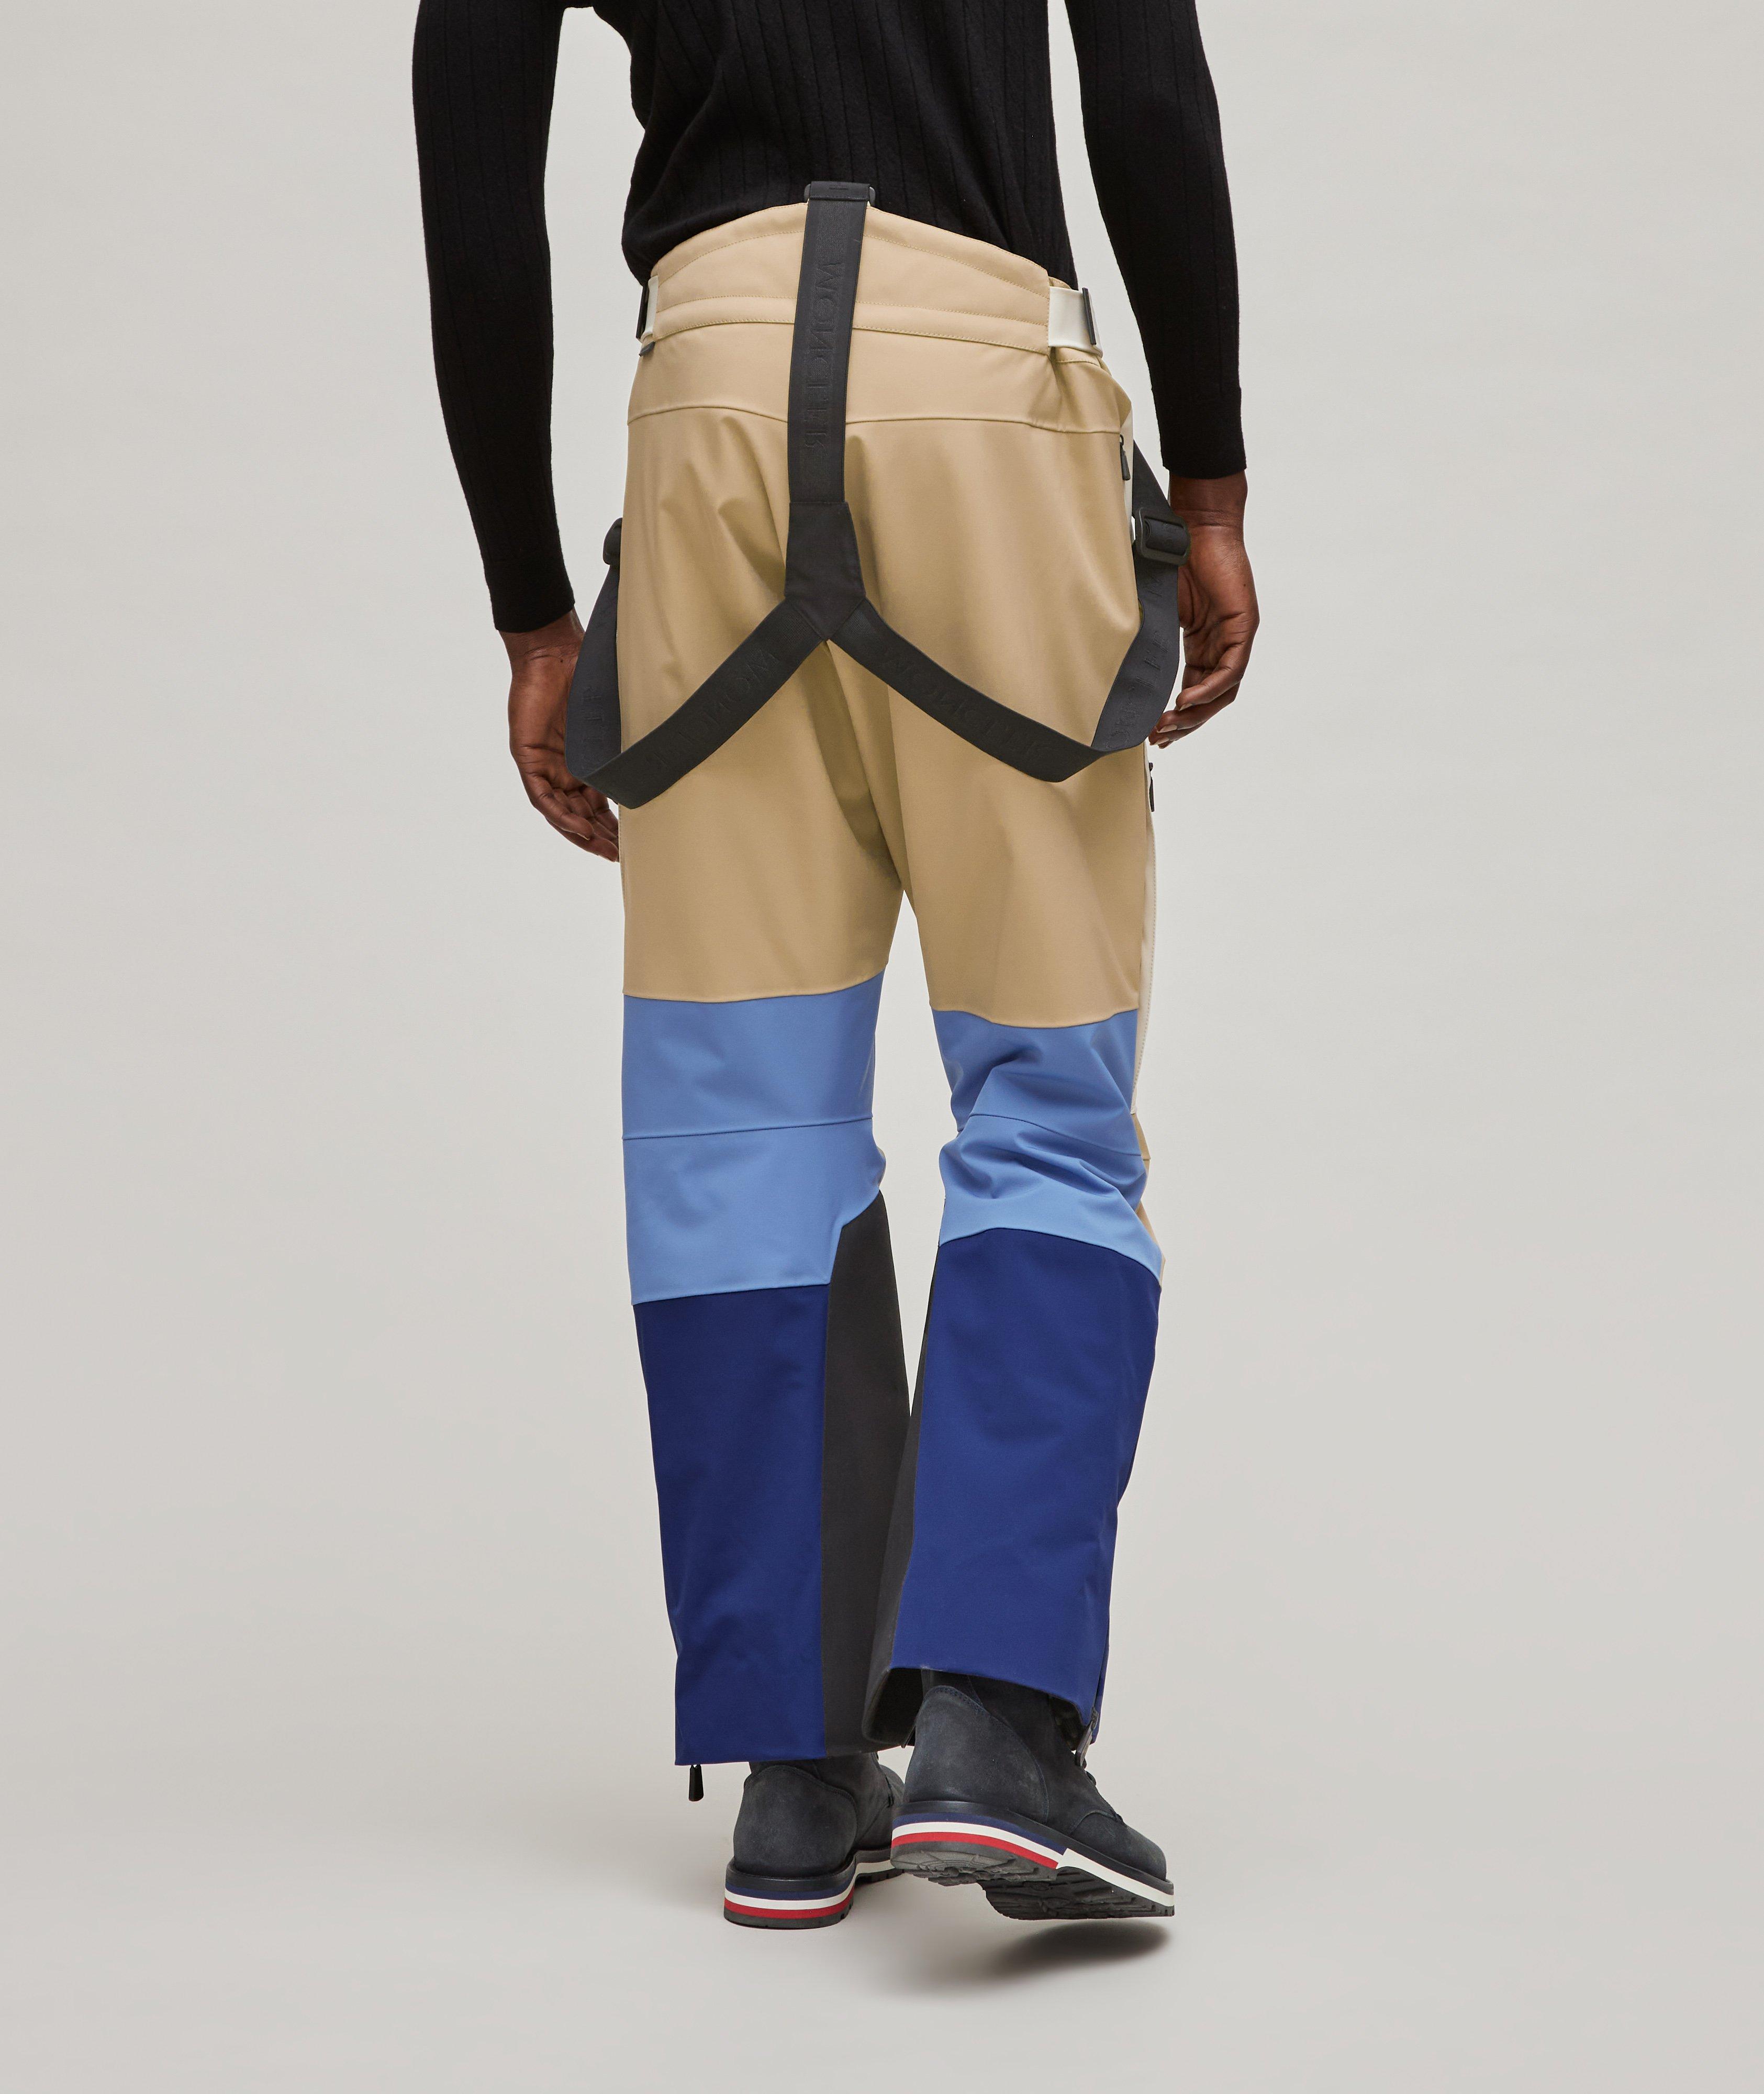 Grenoble PrimaLoft-Insulated Ski Pants image 2